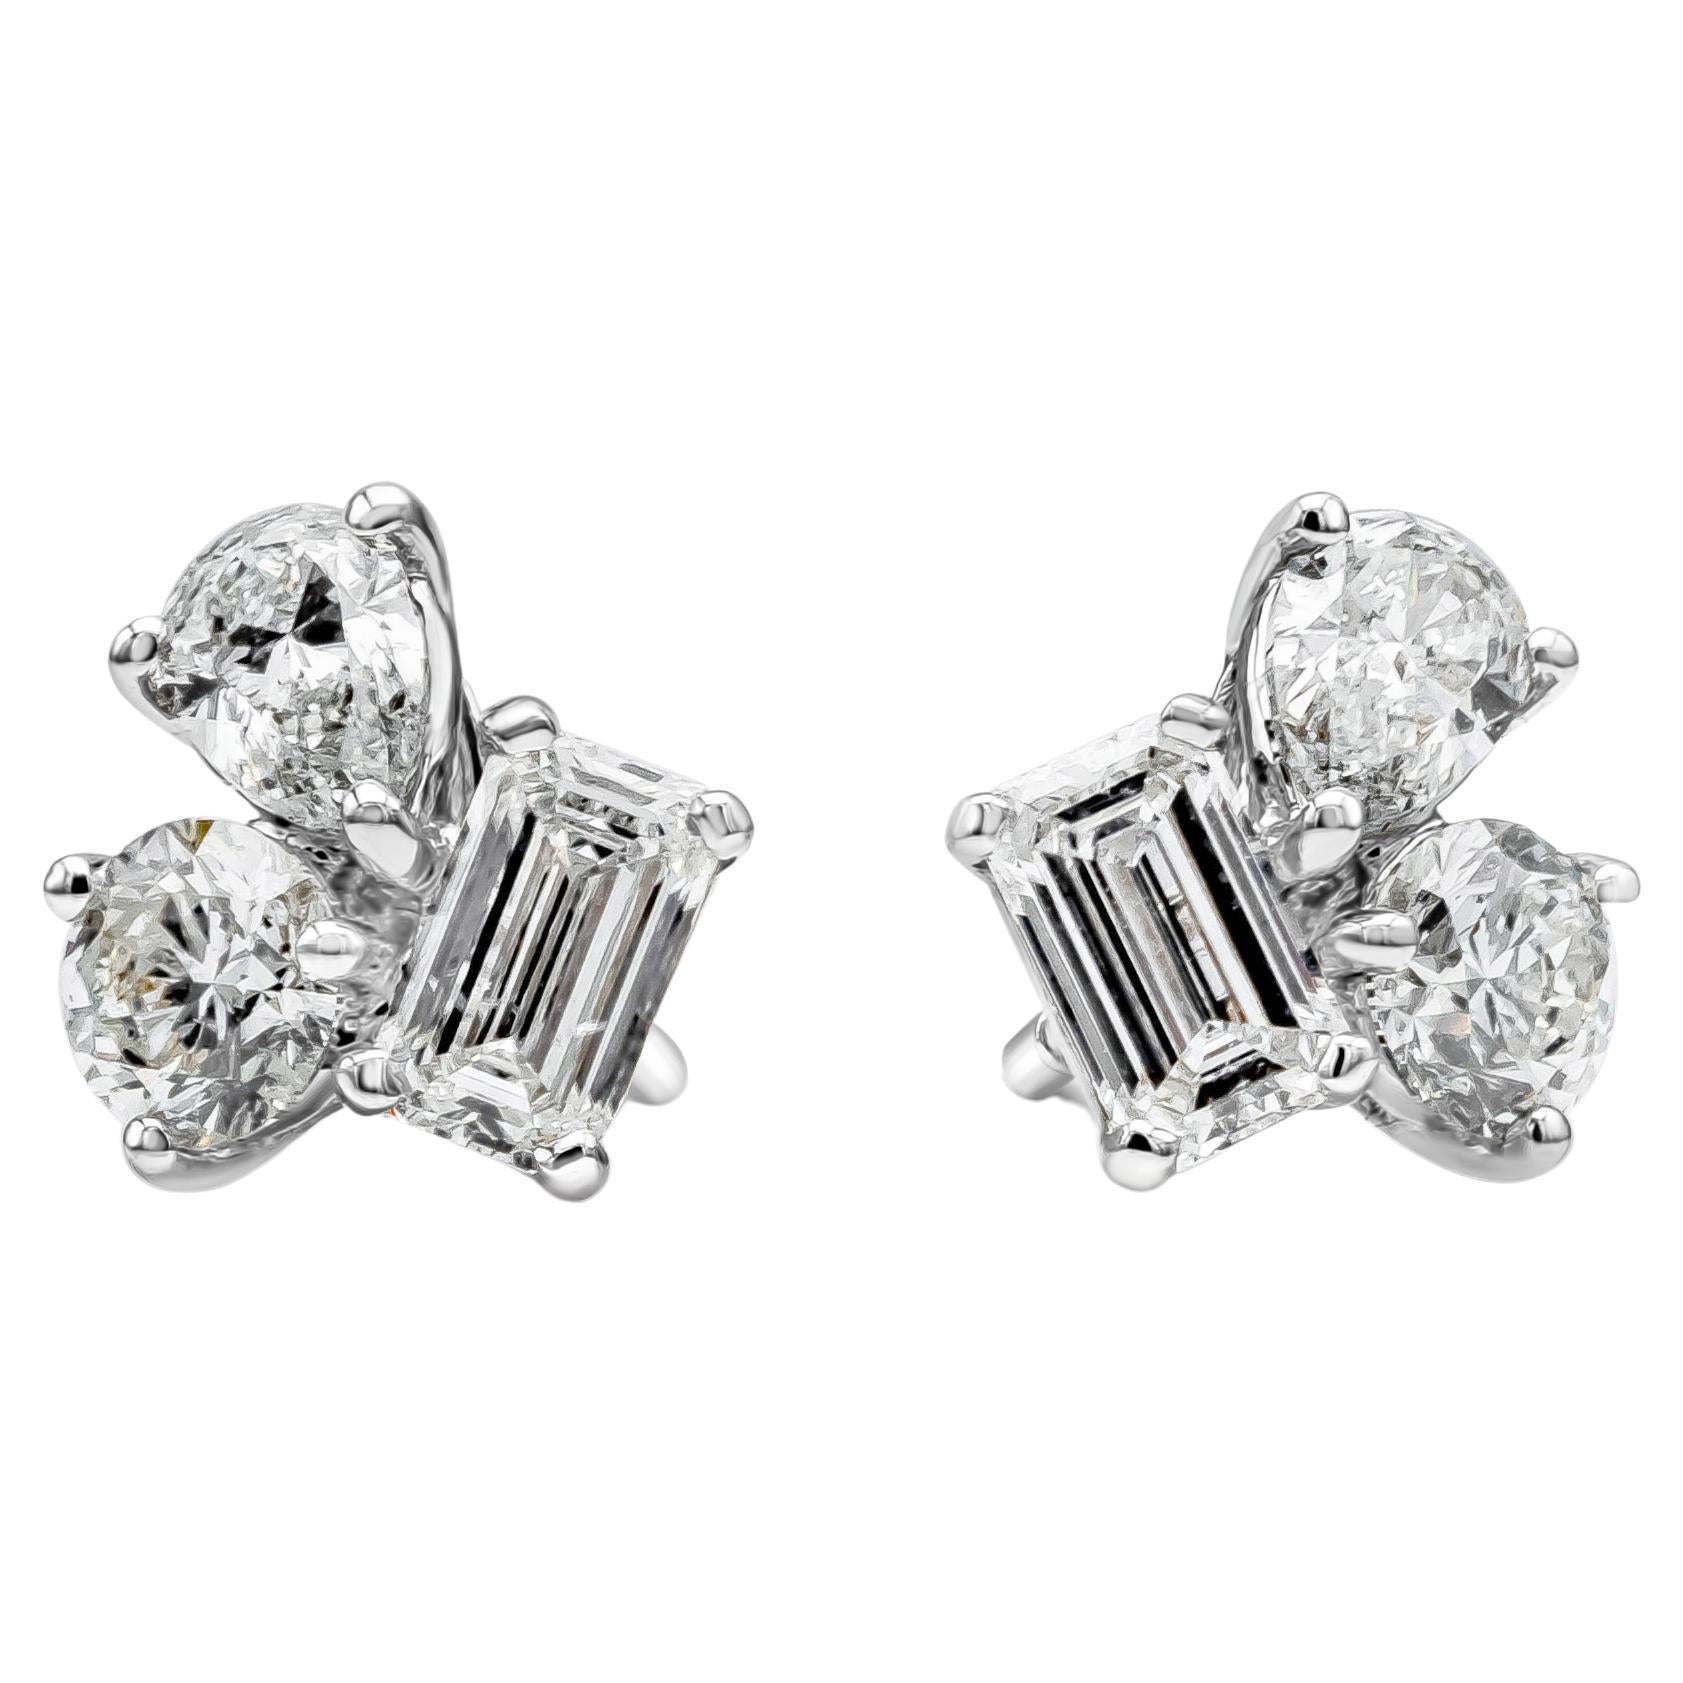 Roman Malakov 1.93 Carats Total Mixed Cut Diamond Three-Stone Stud Earrings 